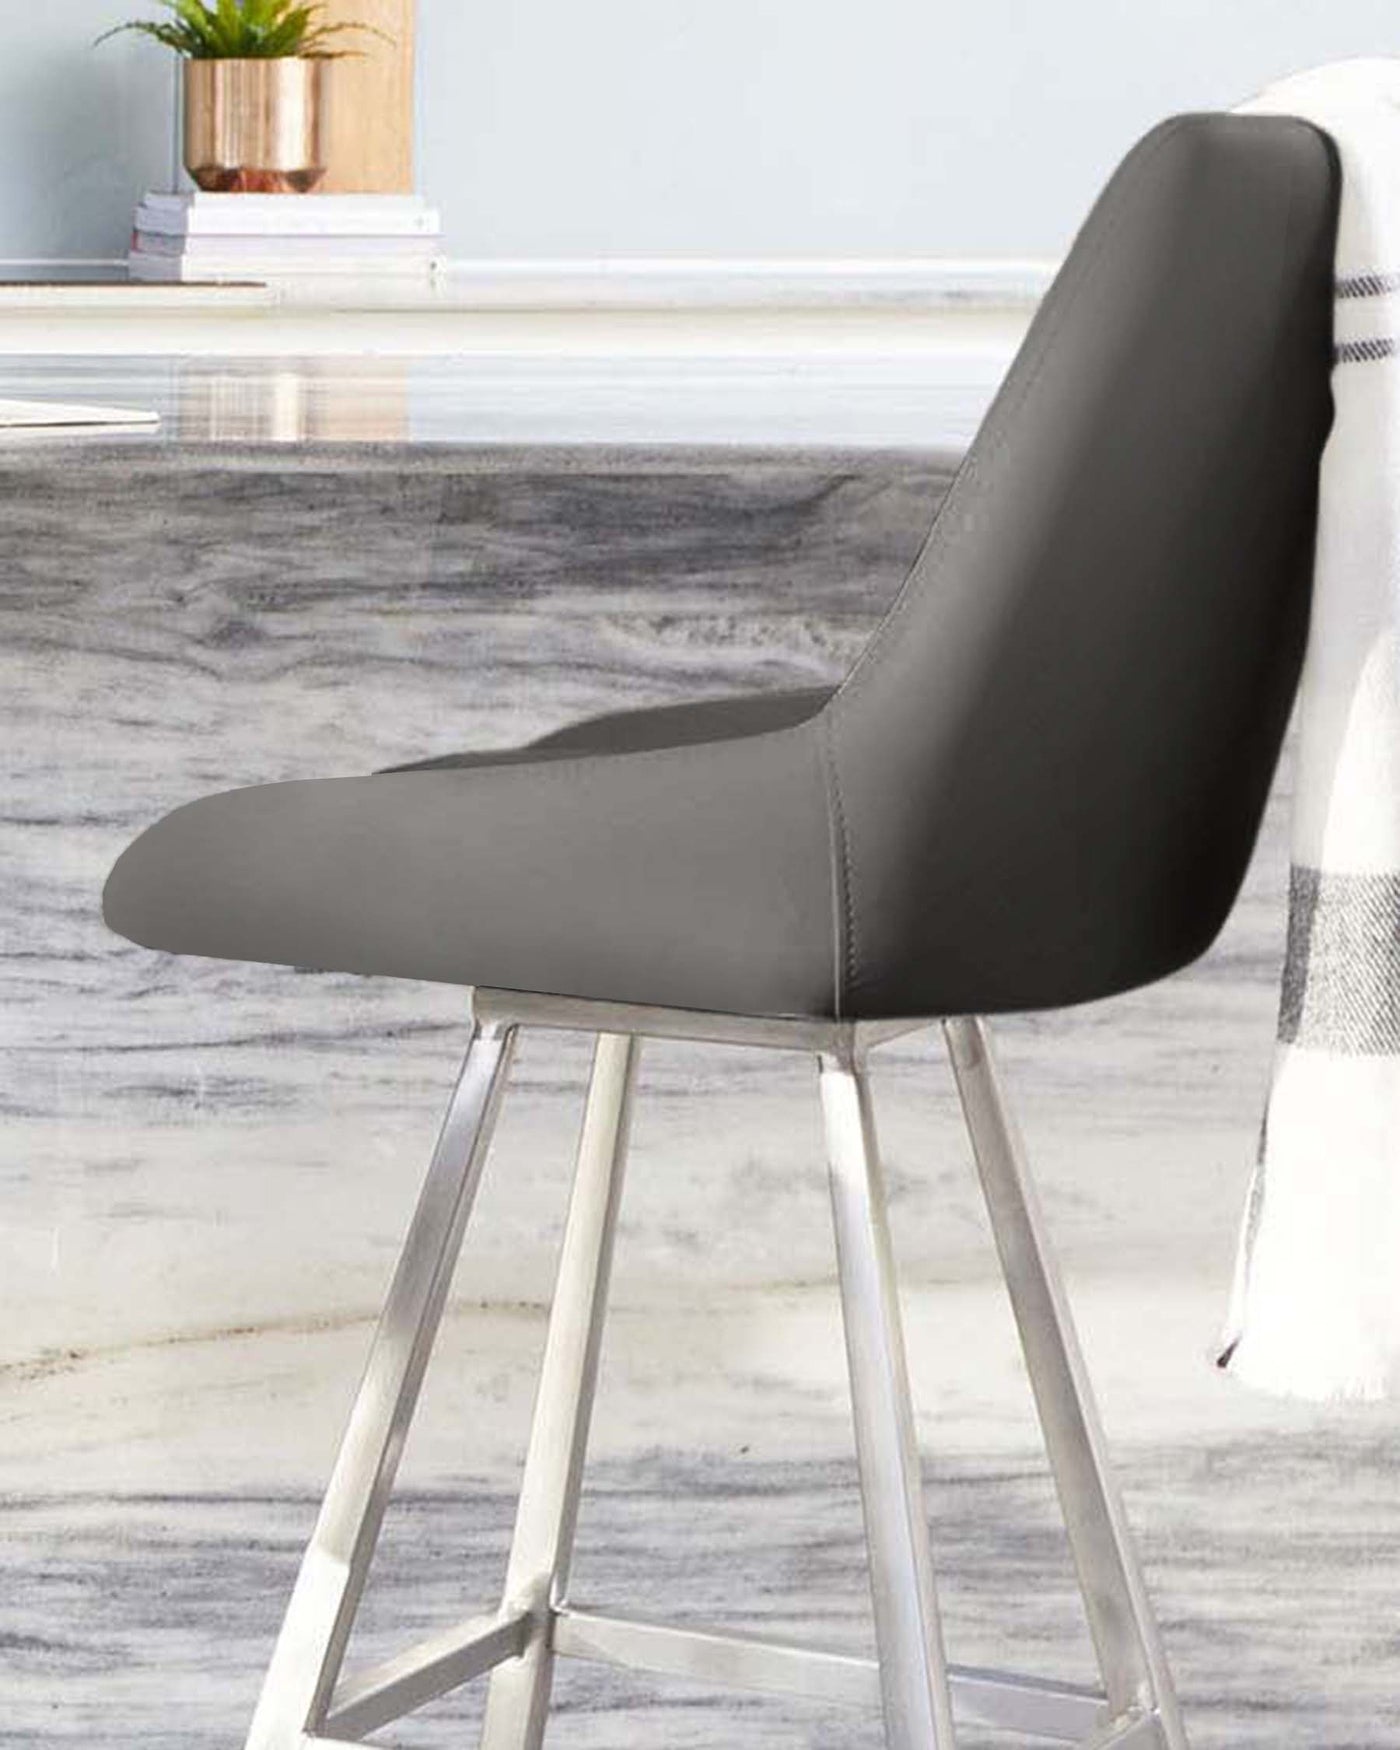 Modern grey upholstered bar stool with sleek metal legs.